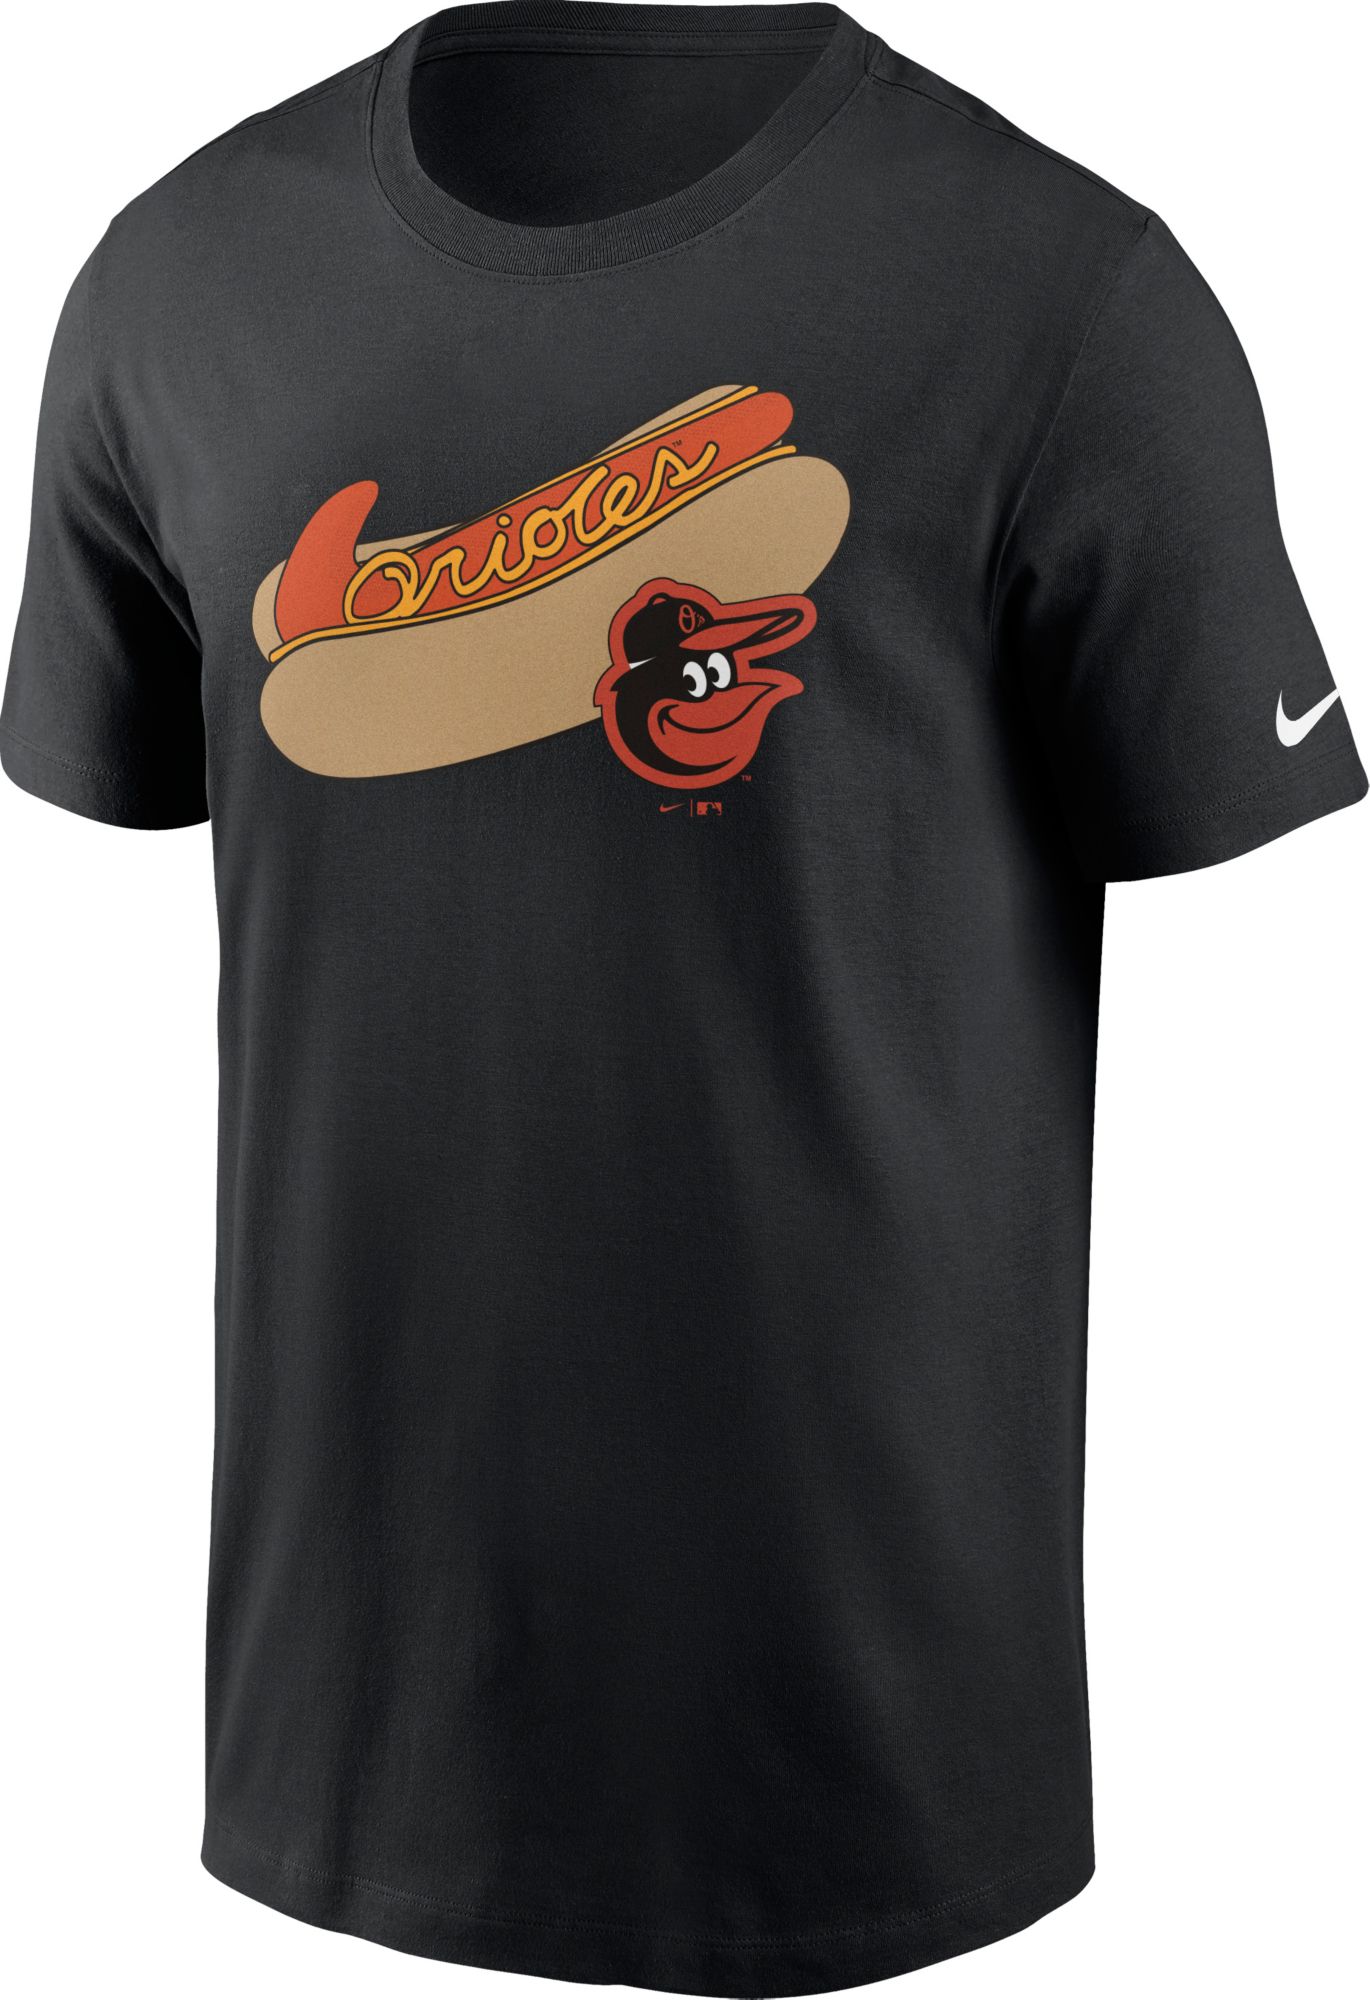 Nike / Men's Baltimore Orioles Black Local Dog T-Shirt